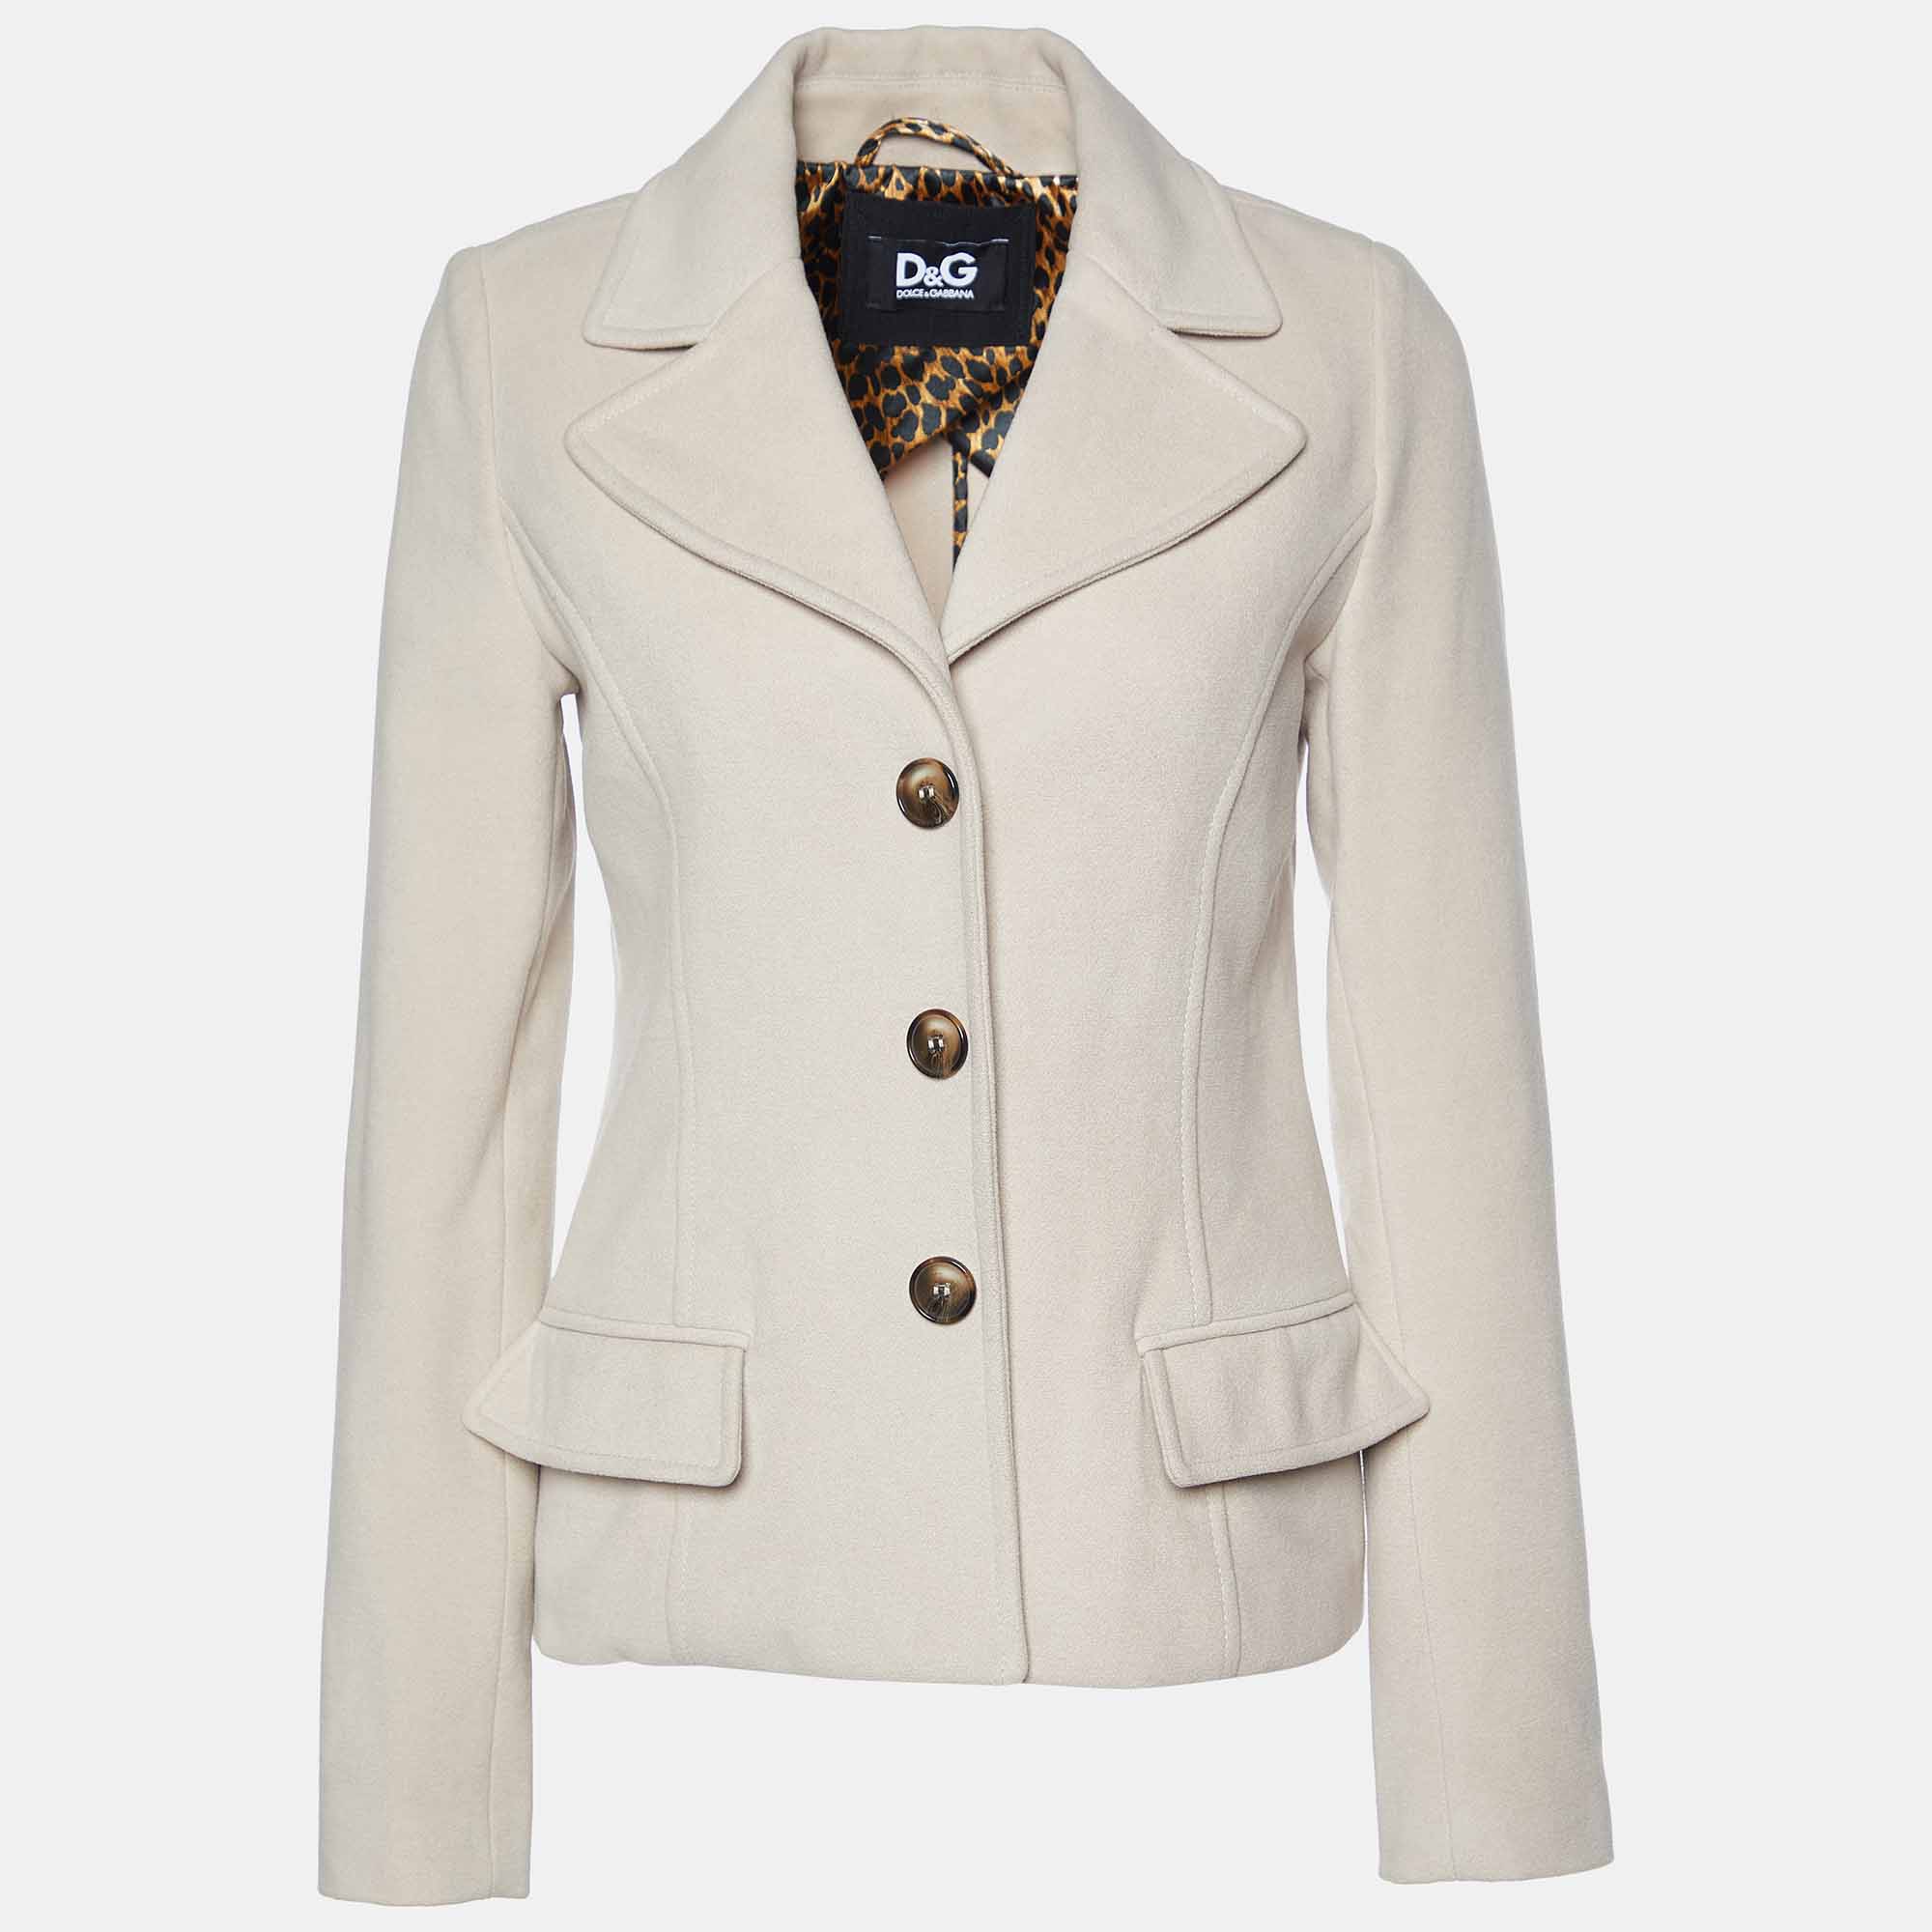 D&g beige fleece button front jacket m